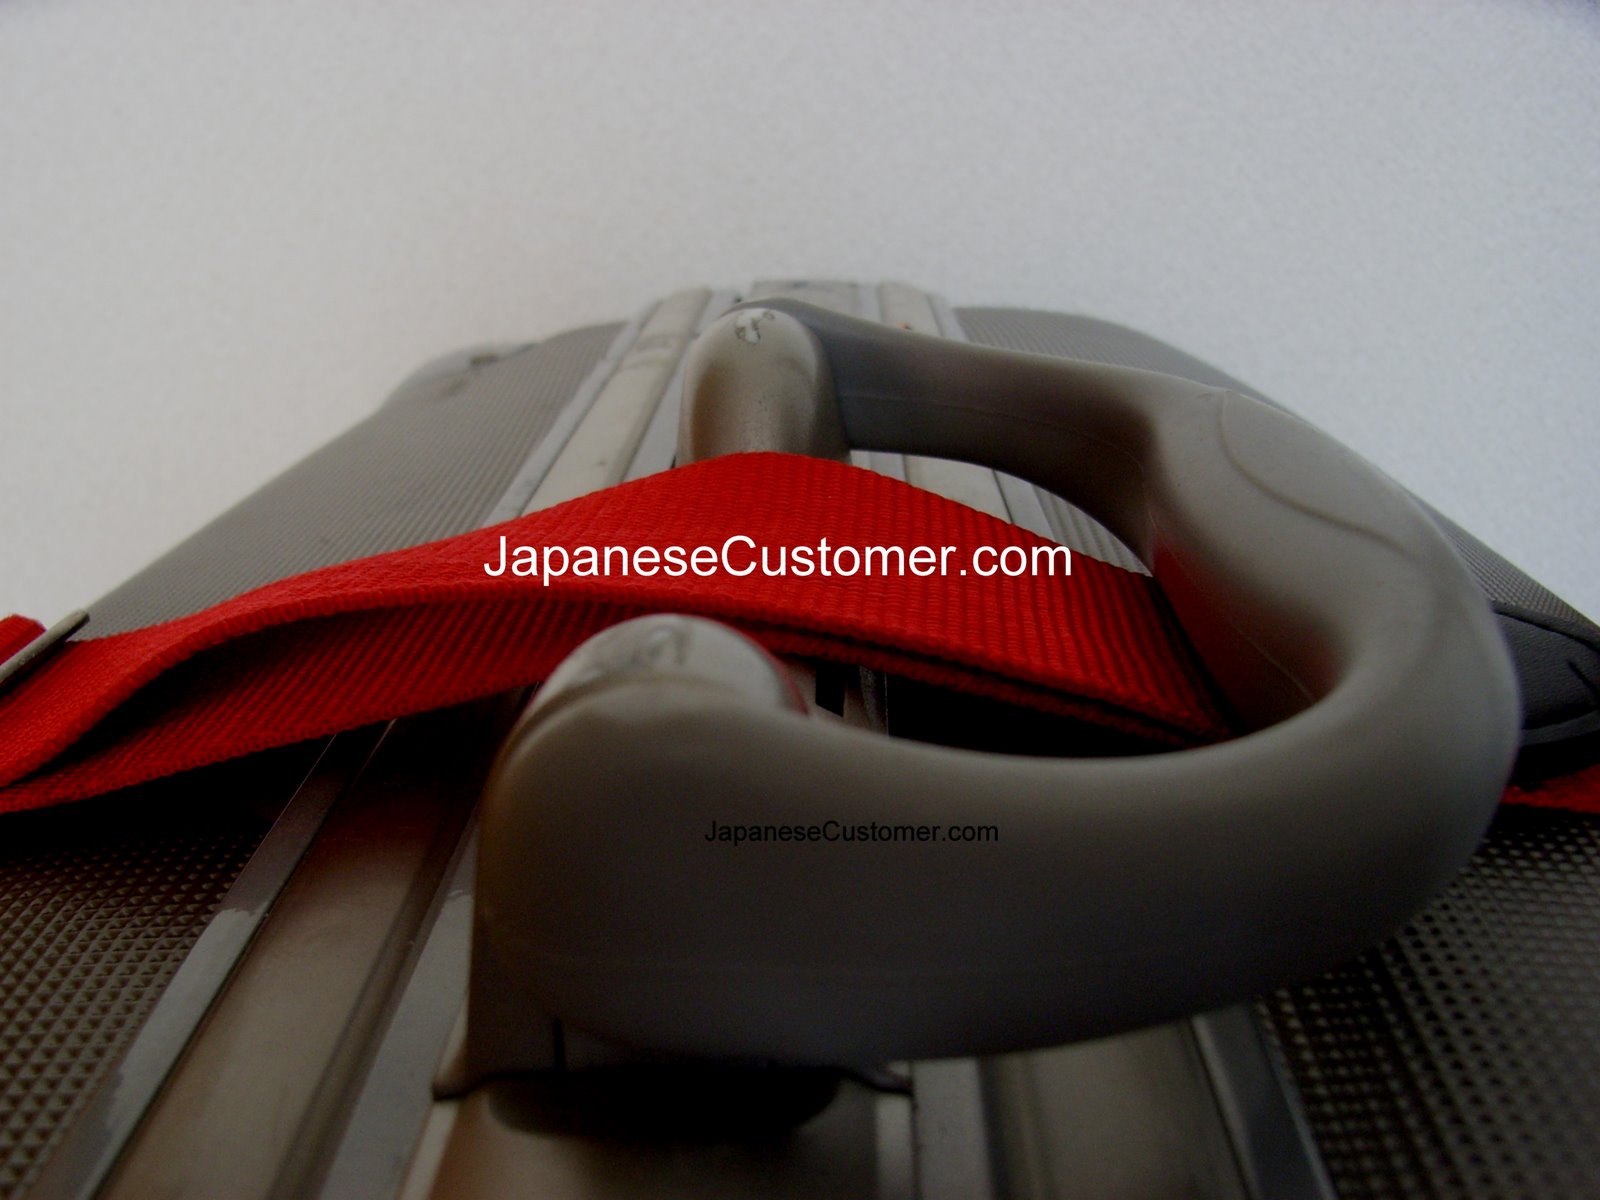 Japanese Customer suitcase copyright peter hanami 2007